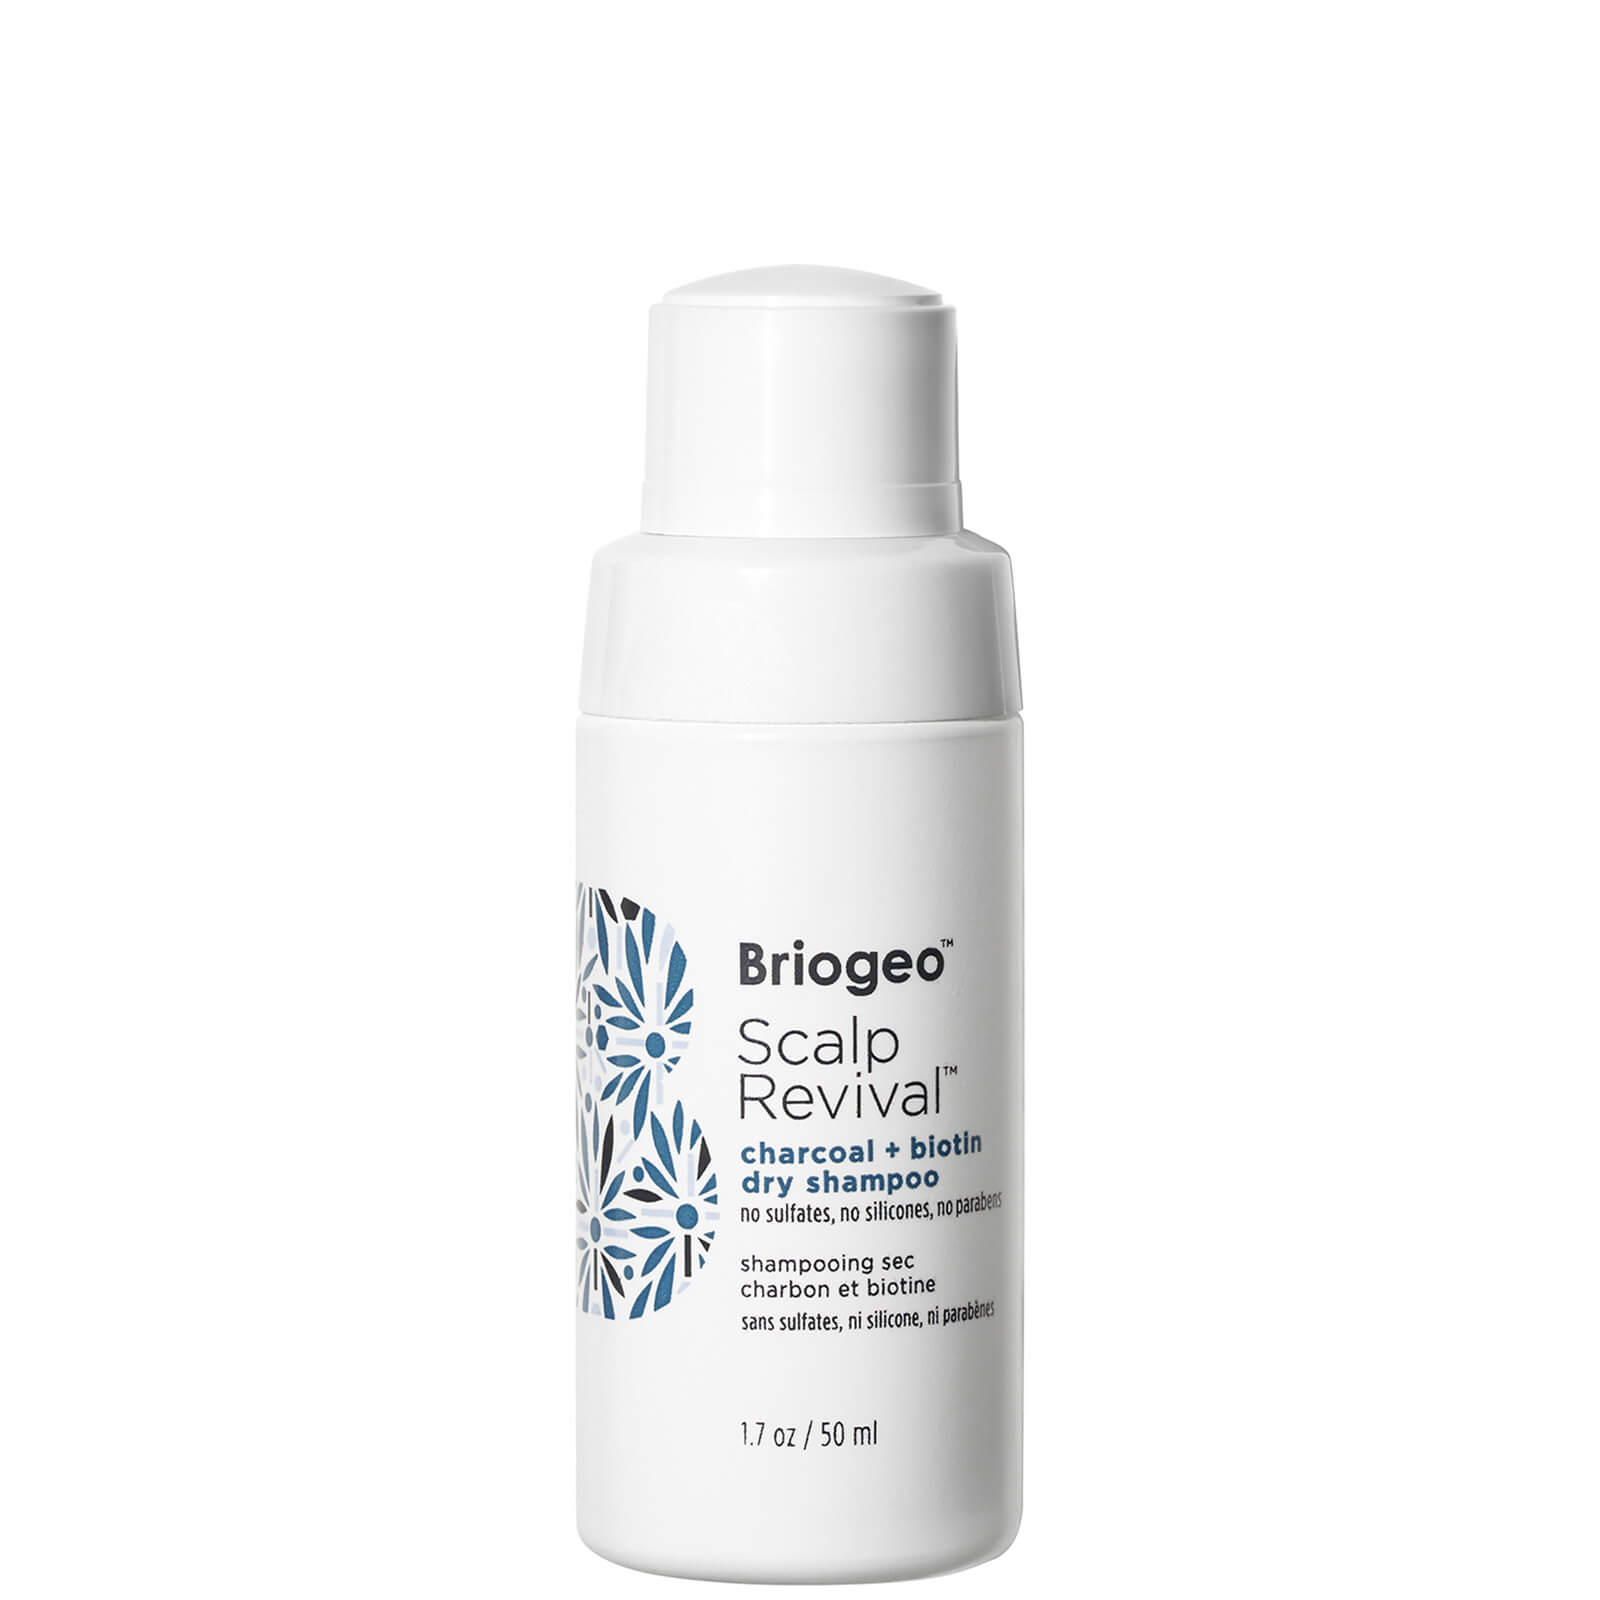 Briogeo Scalp Revival Charcoal and Biotin Dry Shampoo 50ml